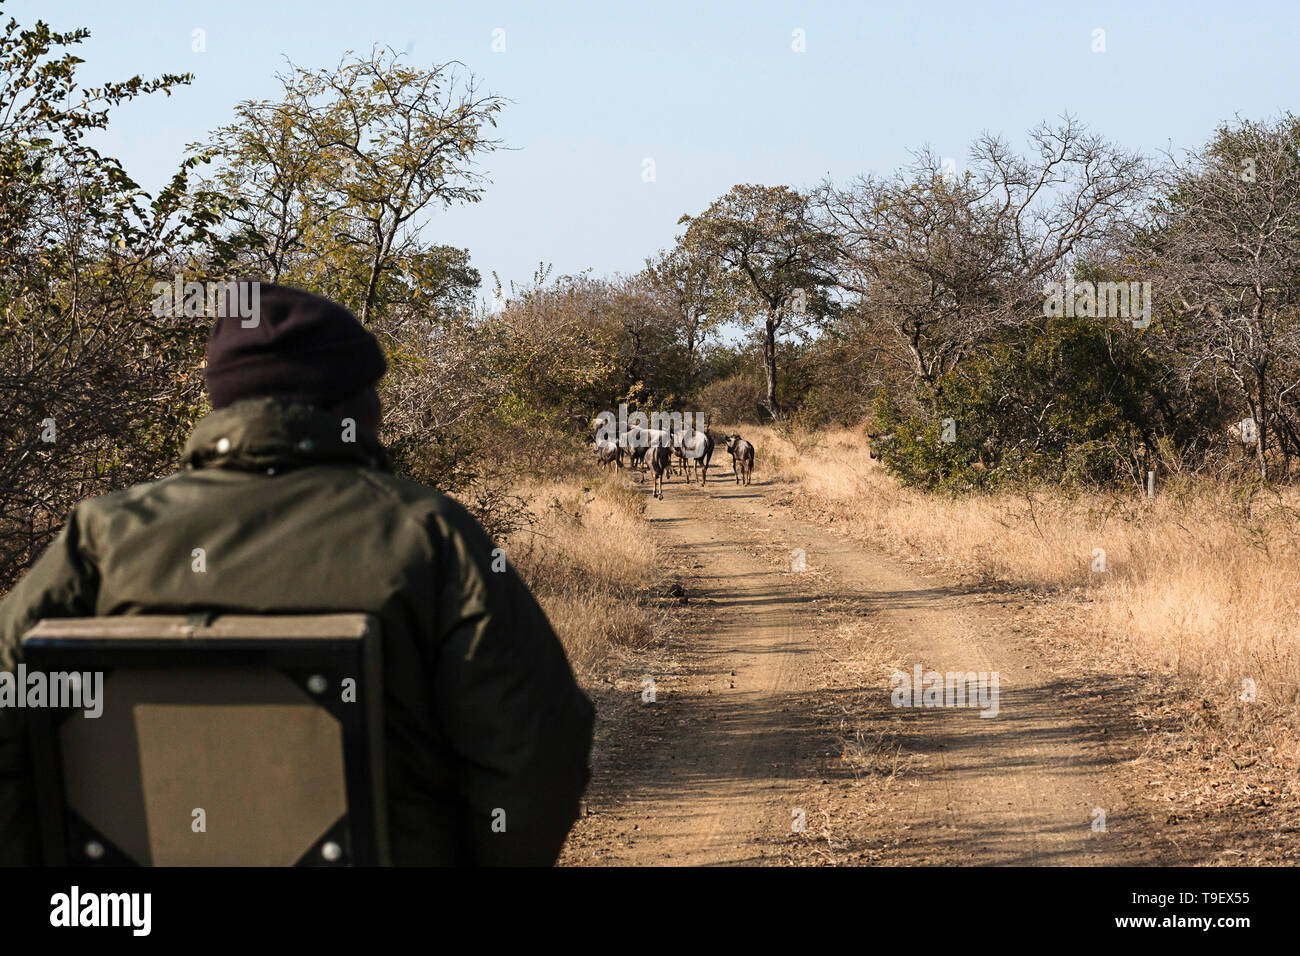 Guided safari in Africa Stock Photo